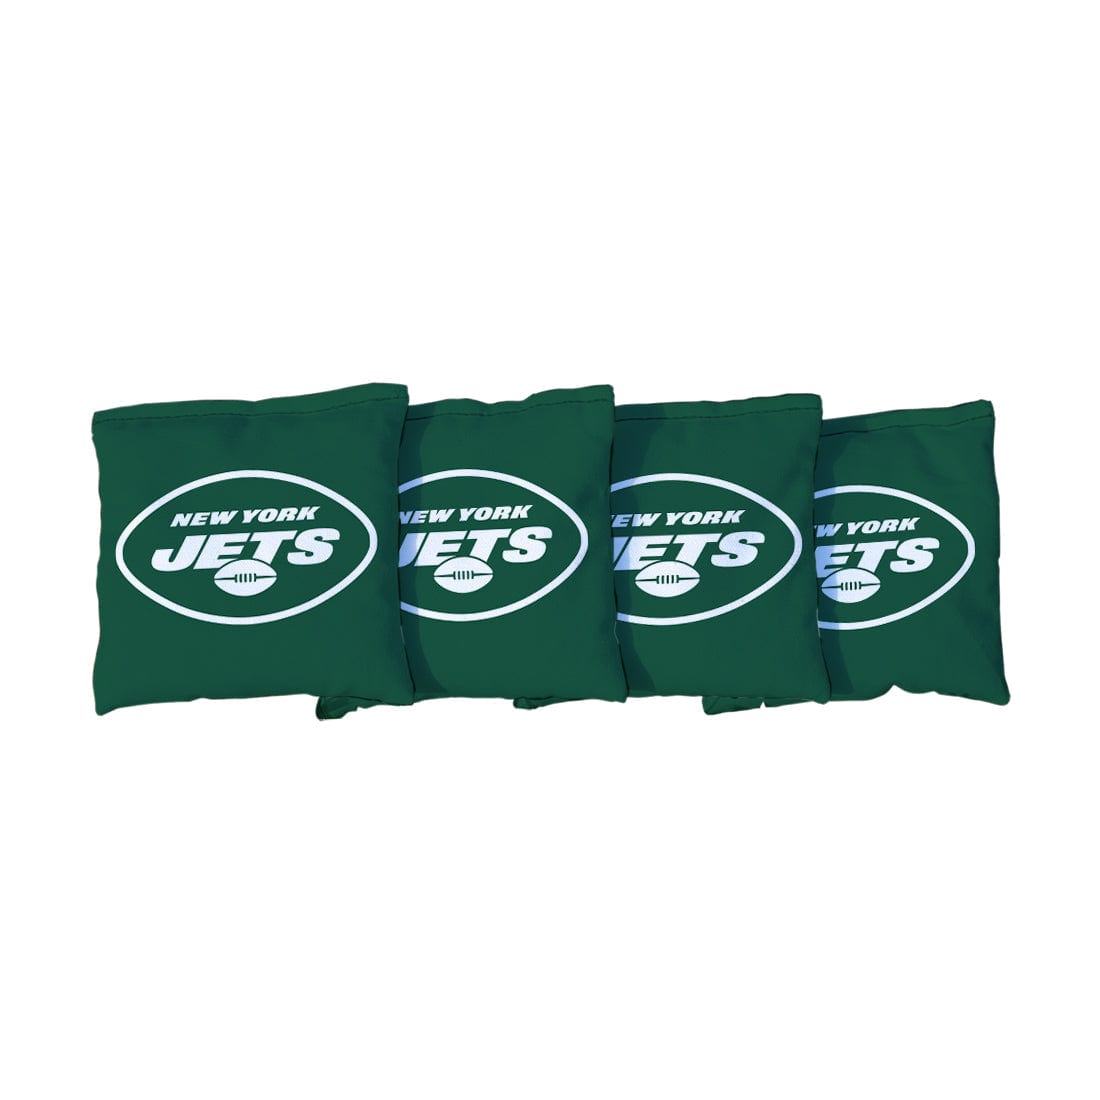 New York Jets NFL Green Cornhole Bags